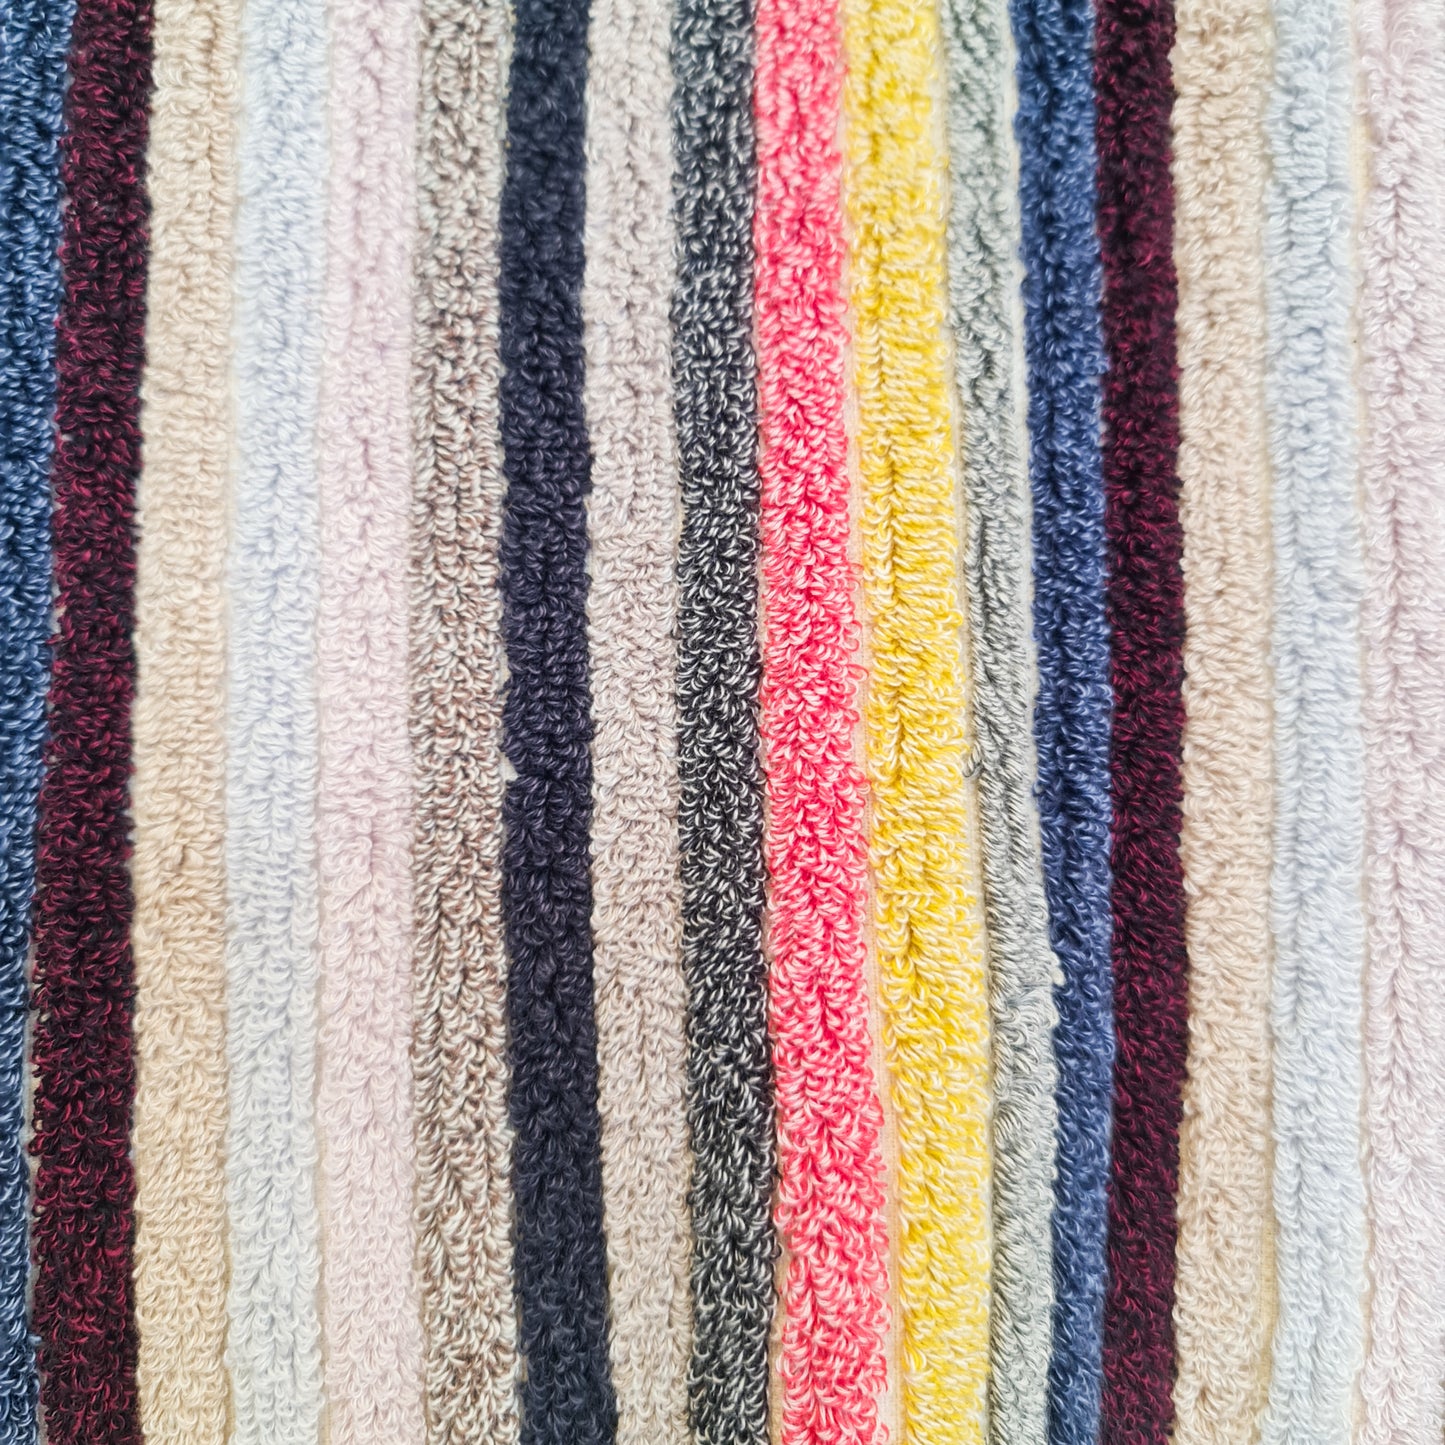 Turkish Hammam Bath Terry Towels Multi Color Stripe